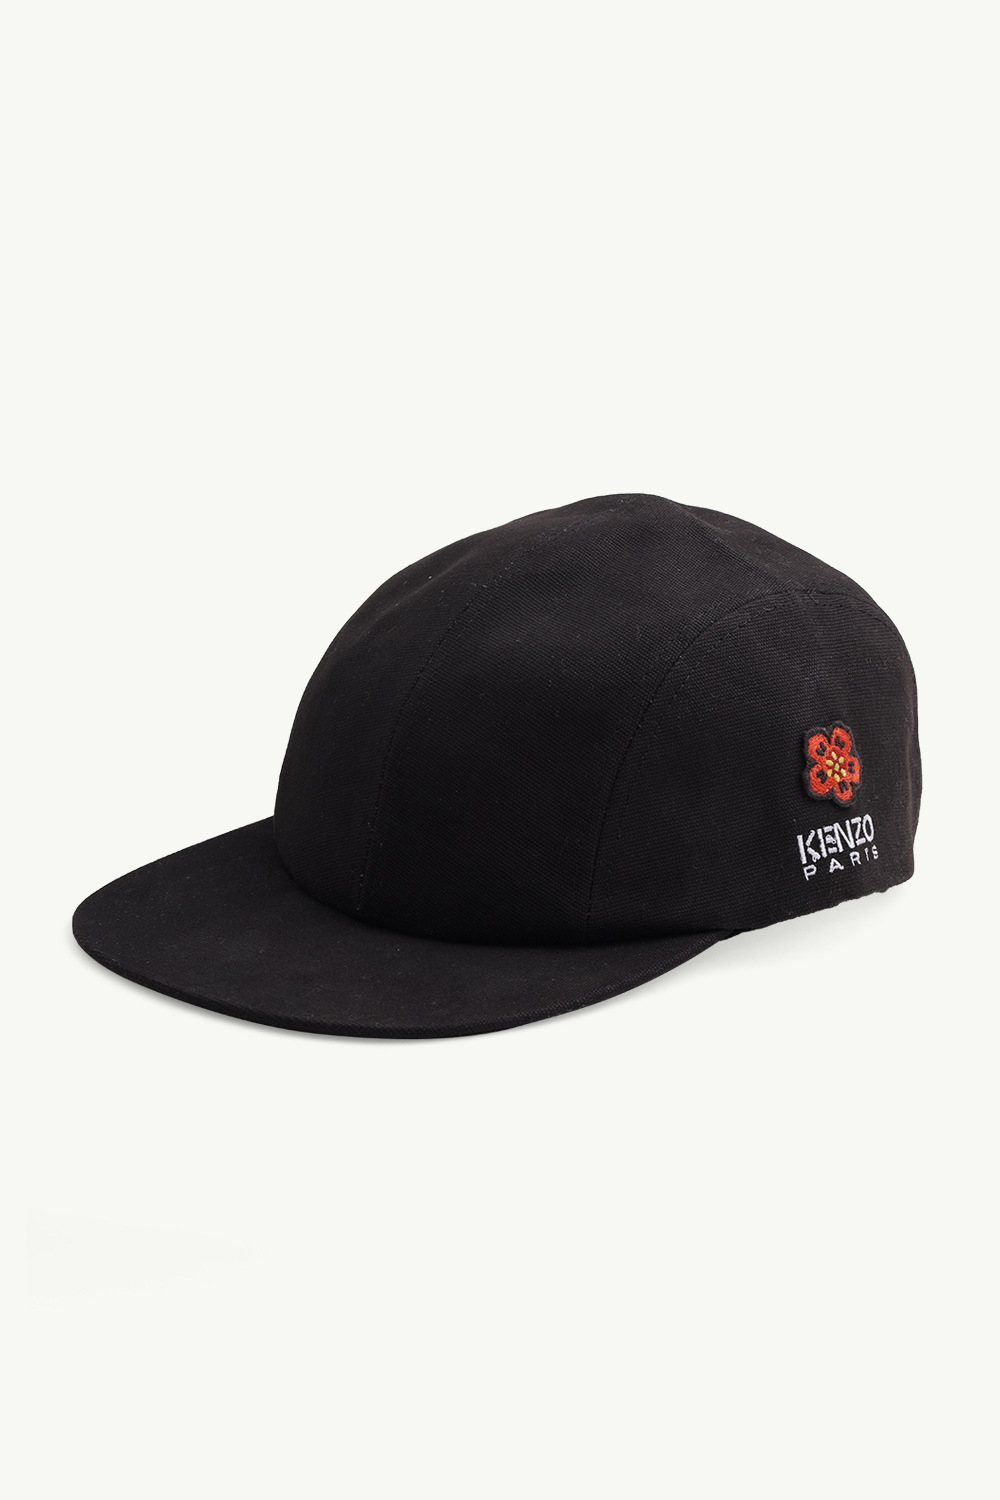 KENZO Boke Flower Crest Baseball Cap in Black 2